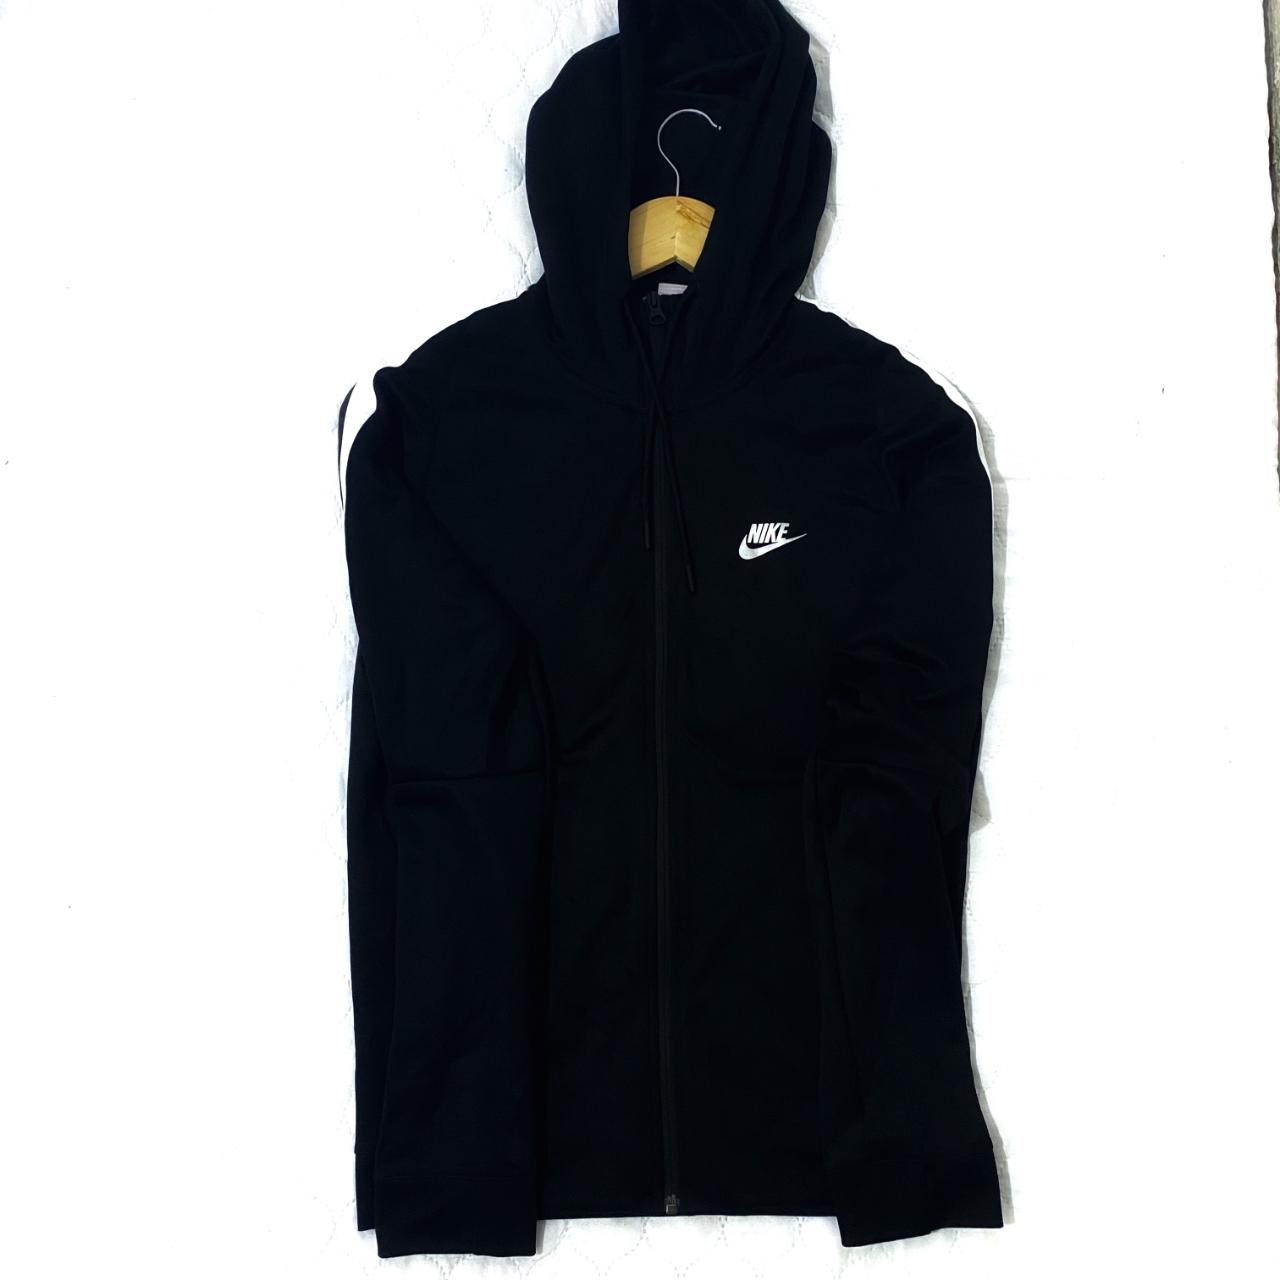 Nike black with white accents zip up sweatshirt... - Depop